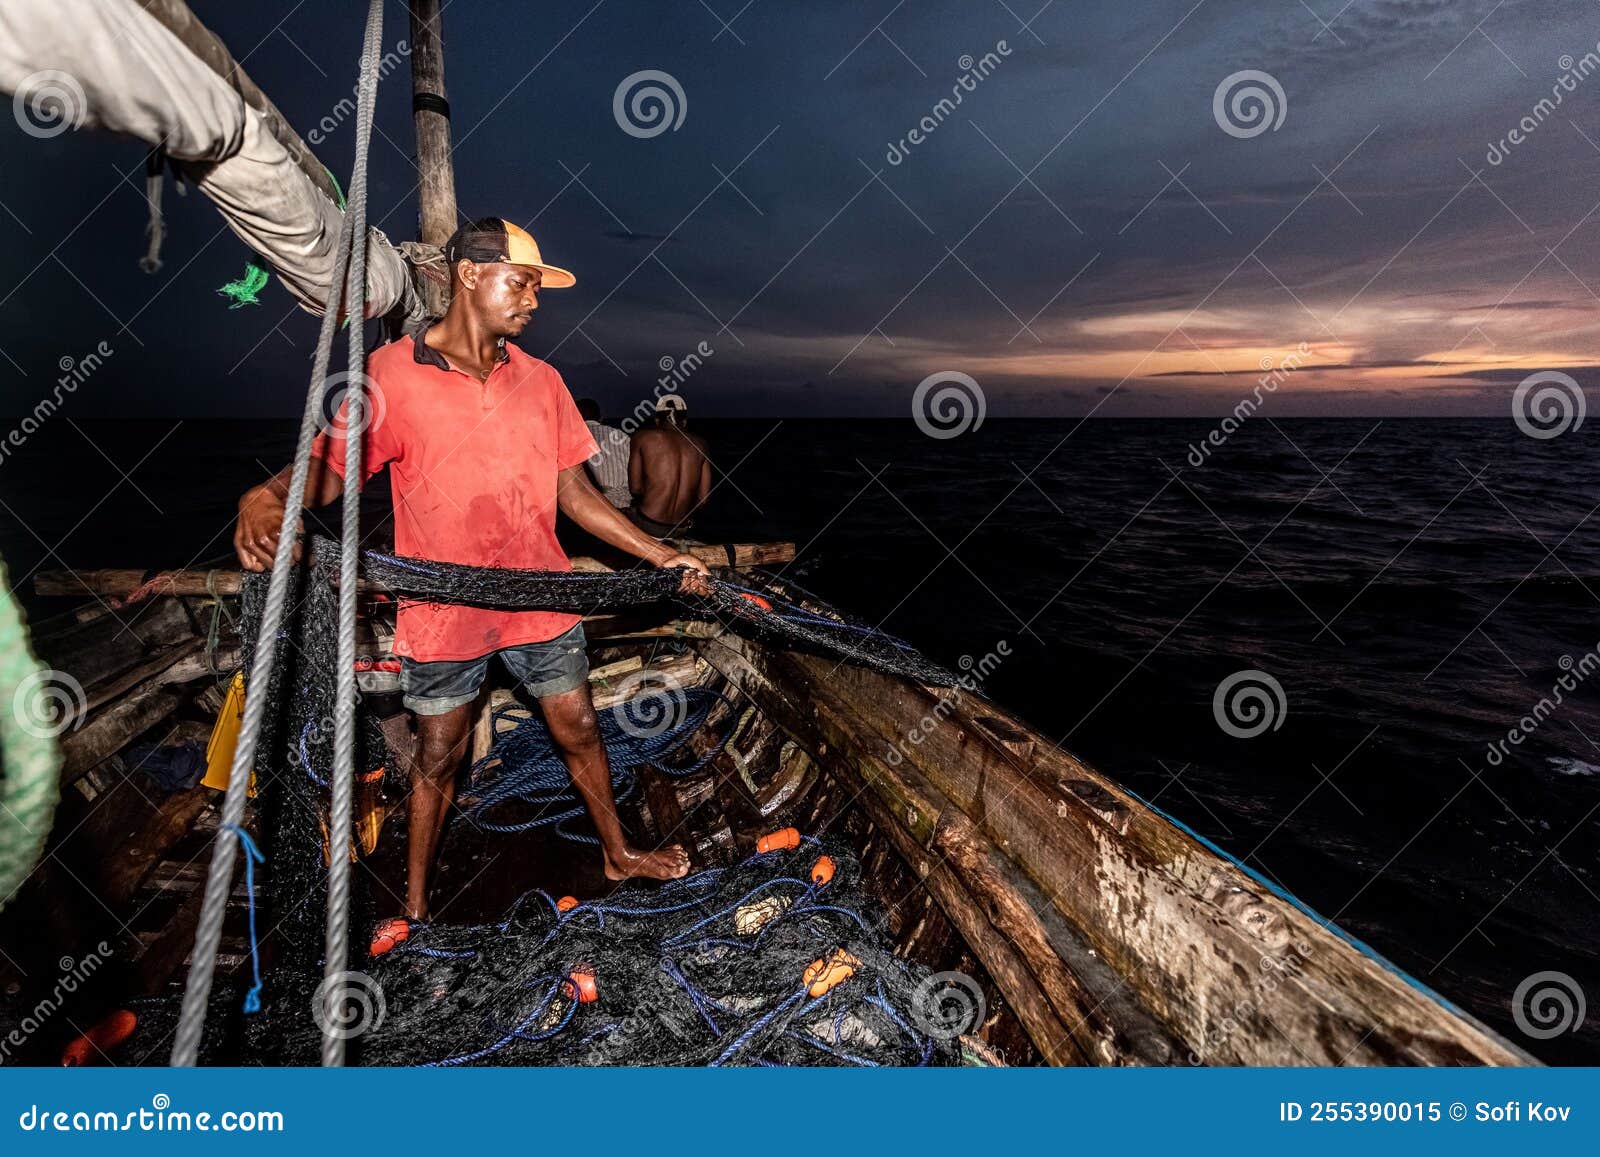 https://thumbs.dreamstime.com/z/night-fishing-man-pulls-out-fishing-net-night-indian-ocean-night-fishing-man-pulls-out-fishing-net-night-indian-255390015.jpg